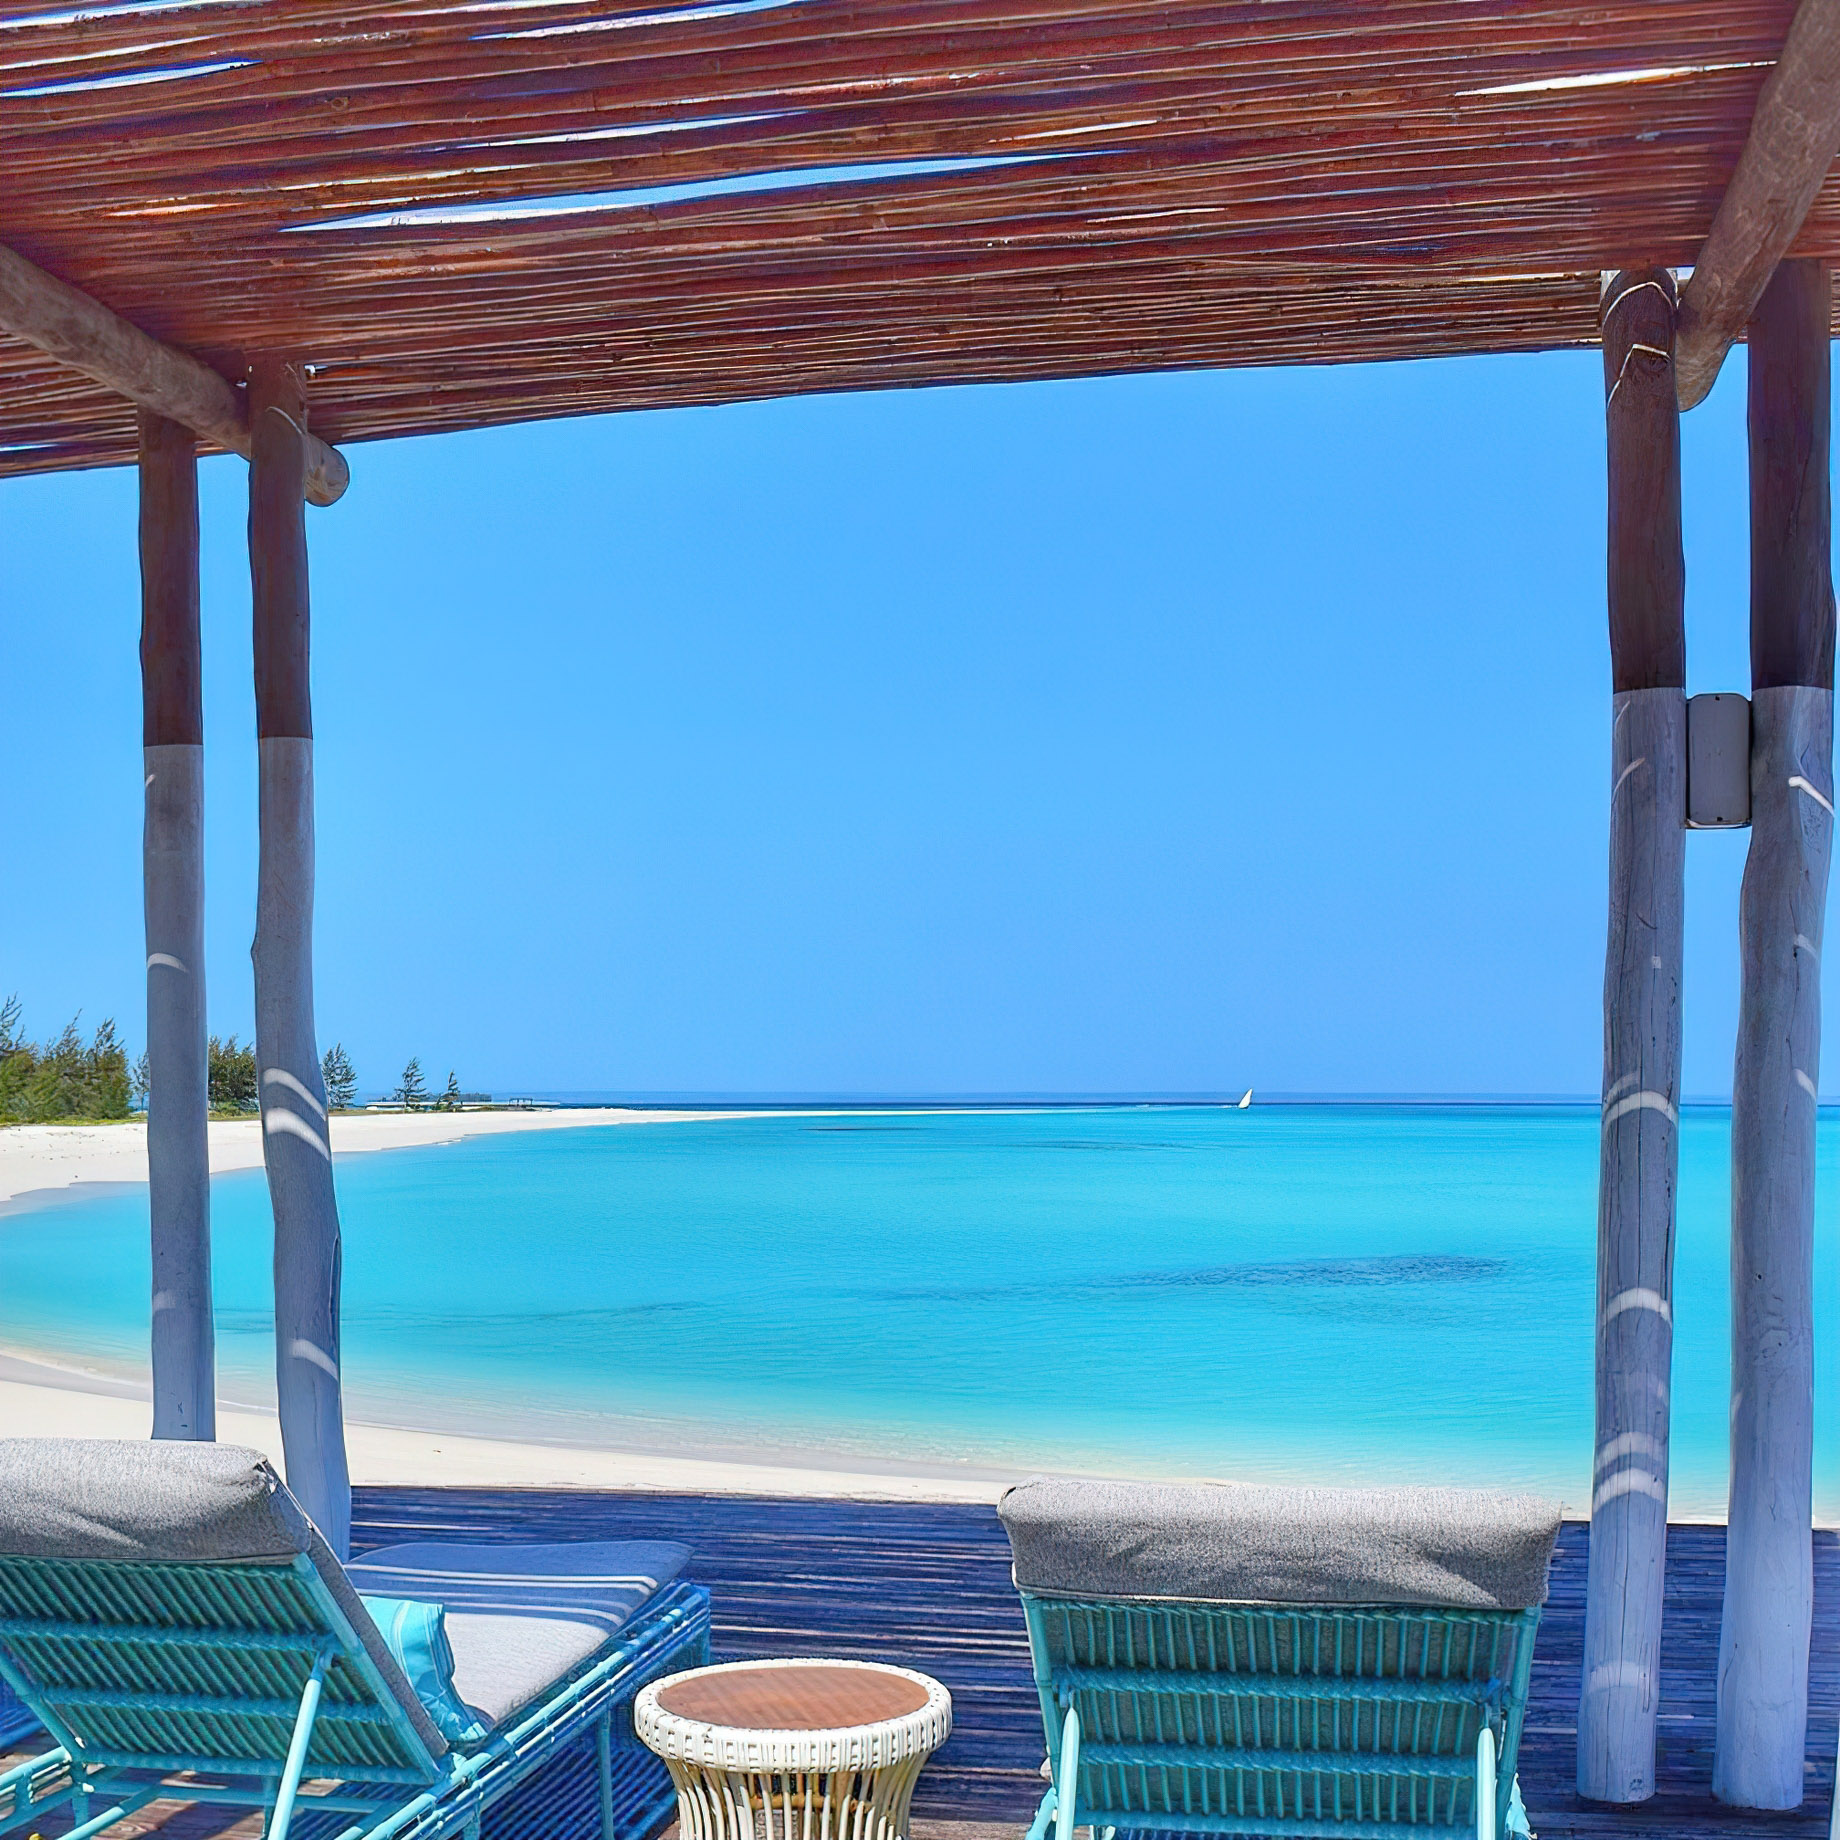 Anantara Medjumbe Island Resort - Mozambique - Ocean View Deck